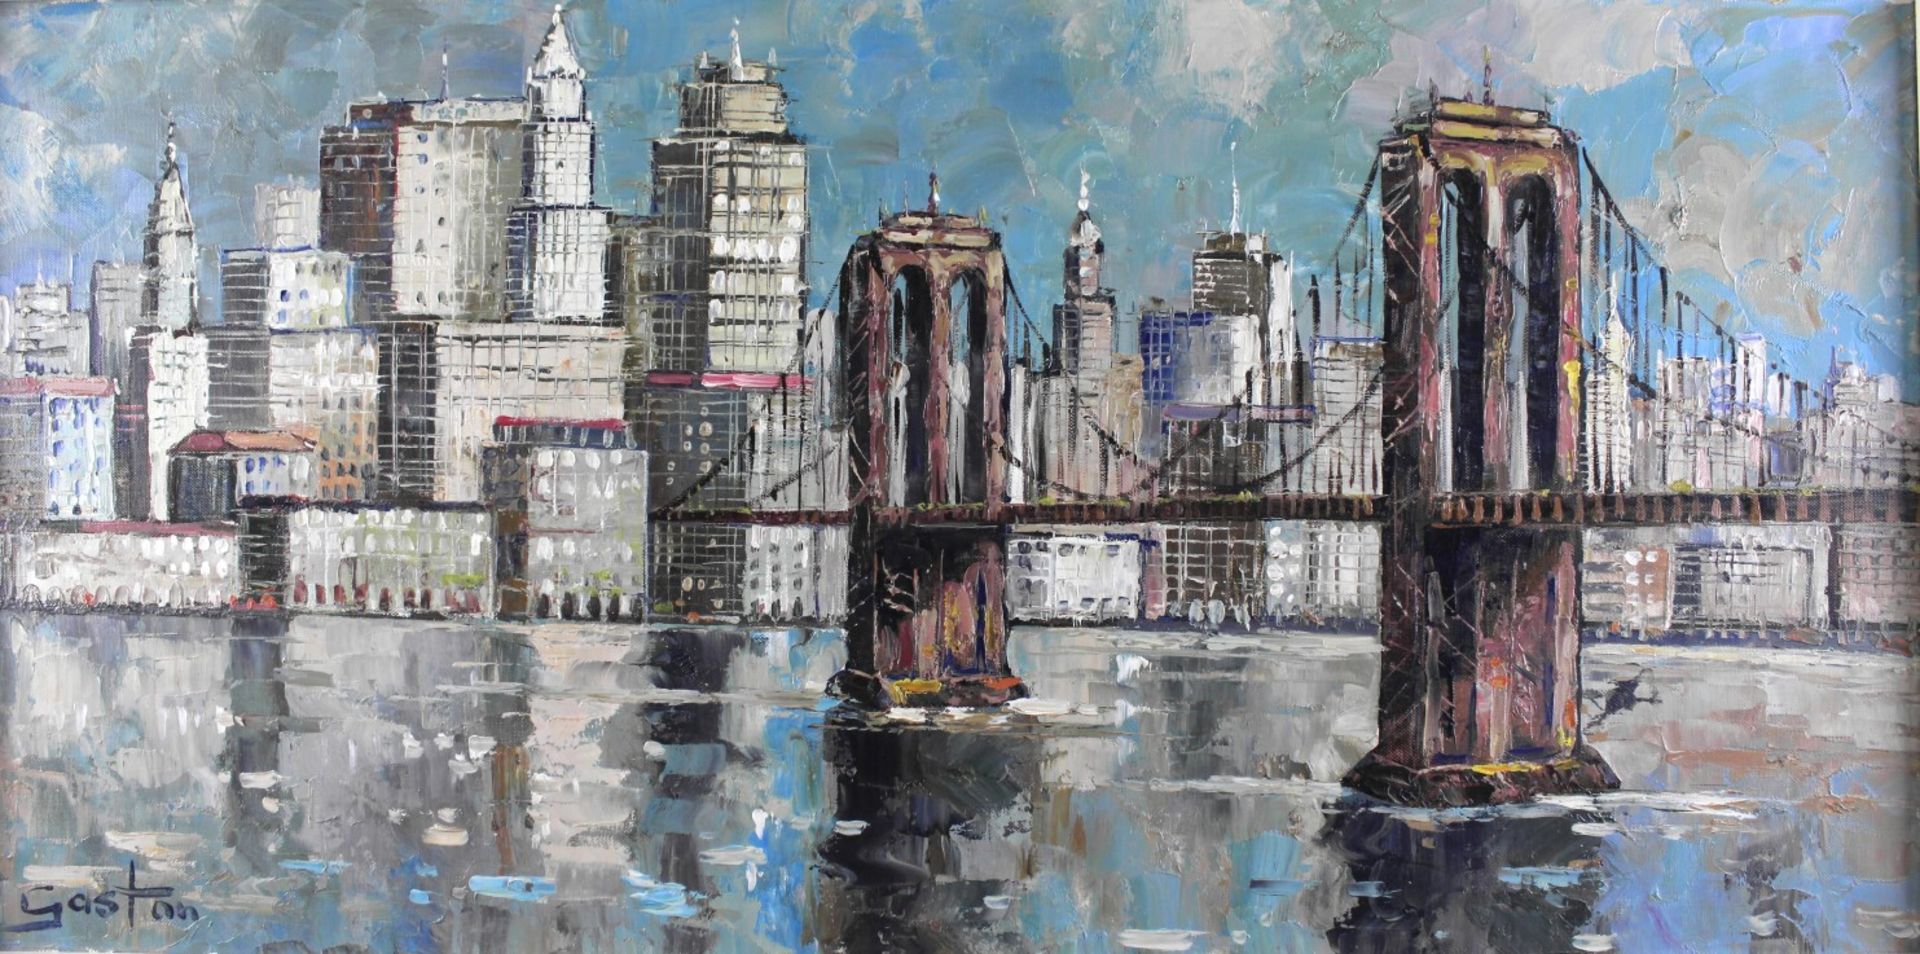 Gaston, Maler 20.Jh., "New Yorker Brooklyn Bridge" Öl/Leinwand, signiert, 40,5 x 80 cm - Bild 2 aus 6